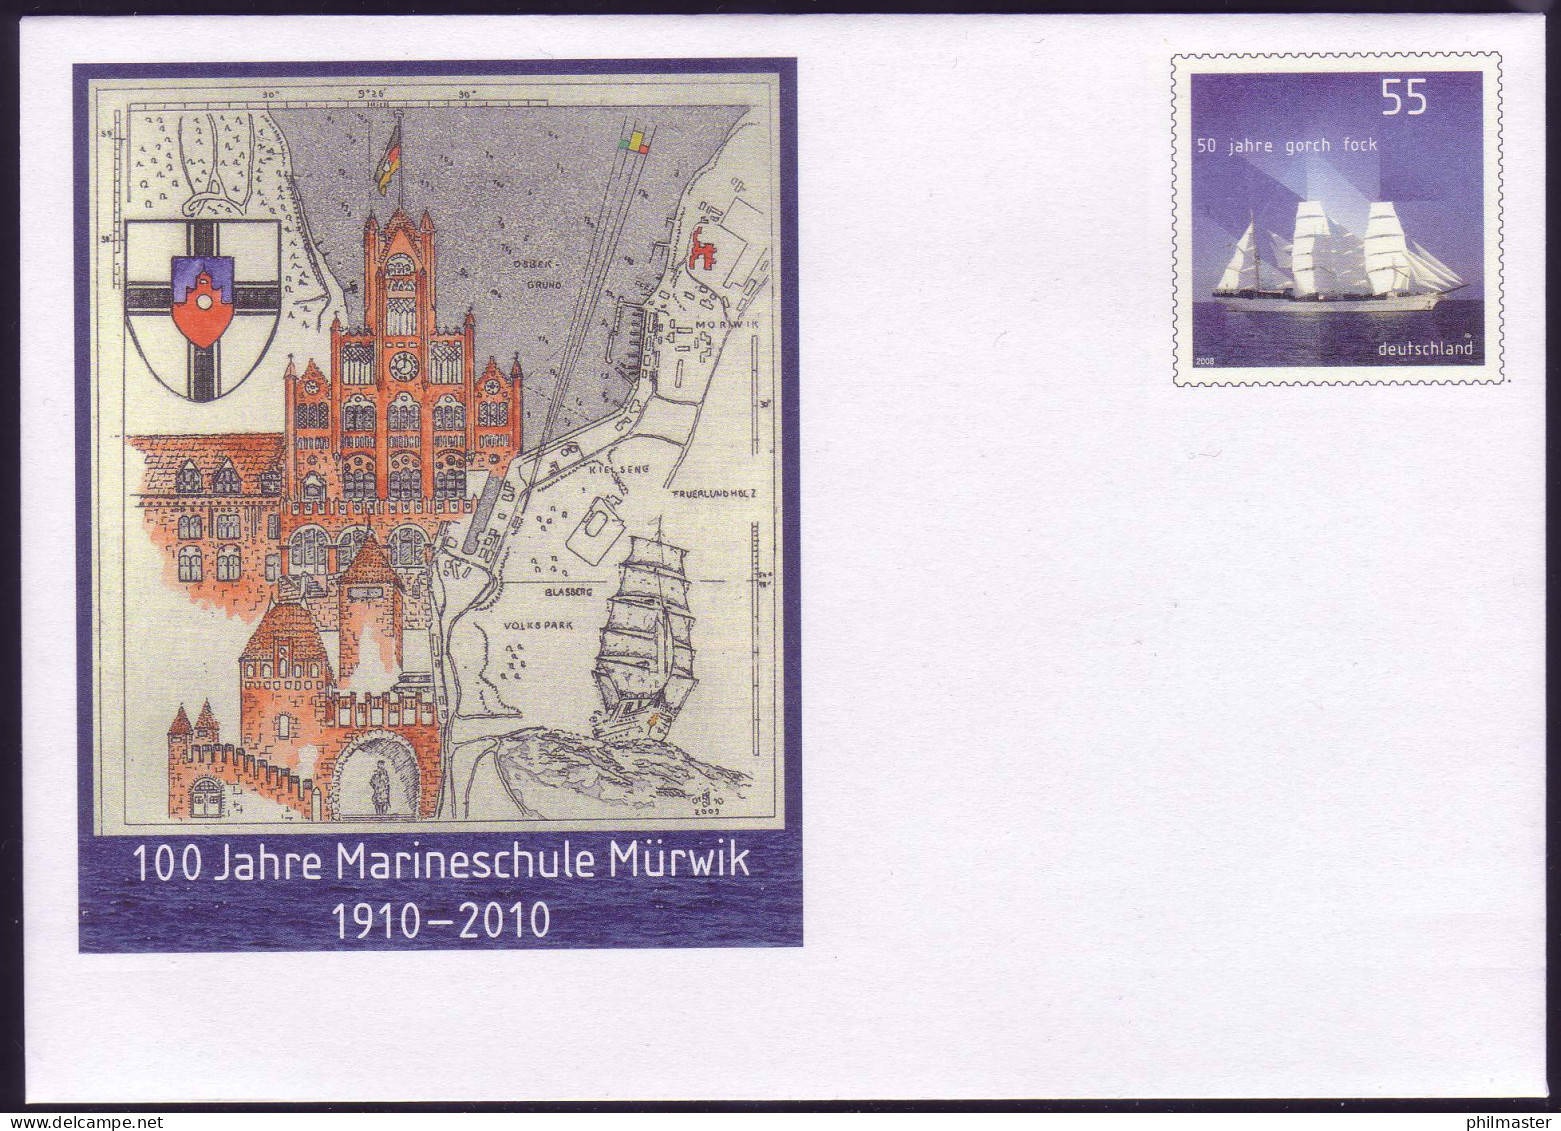 USo 209 100 Jahre Marineschule Mürwik 2010, Postfrisch - Covers - Mint